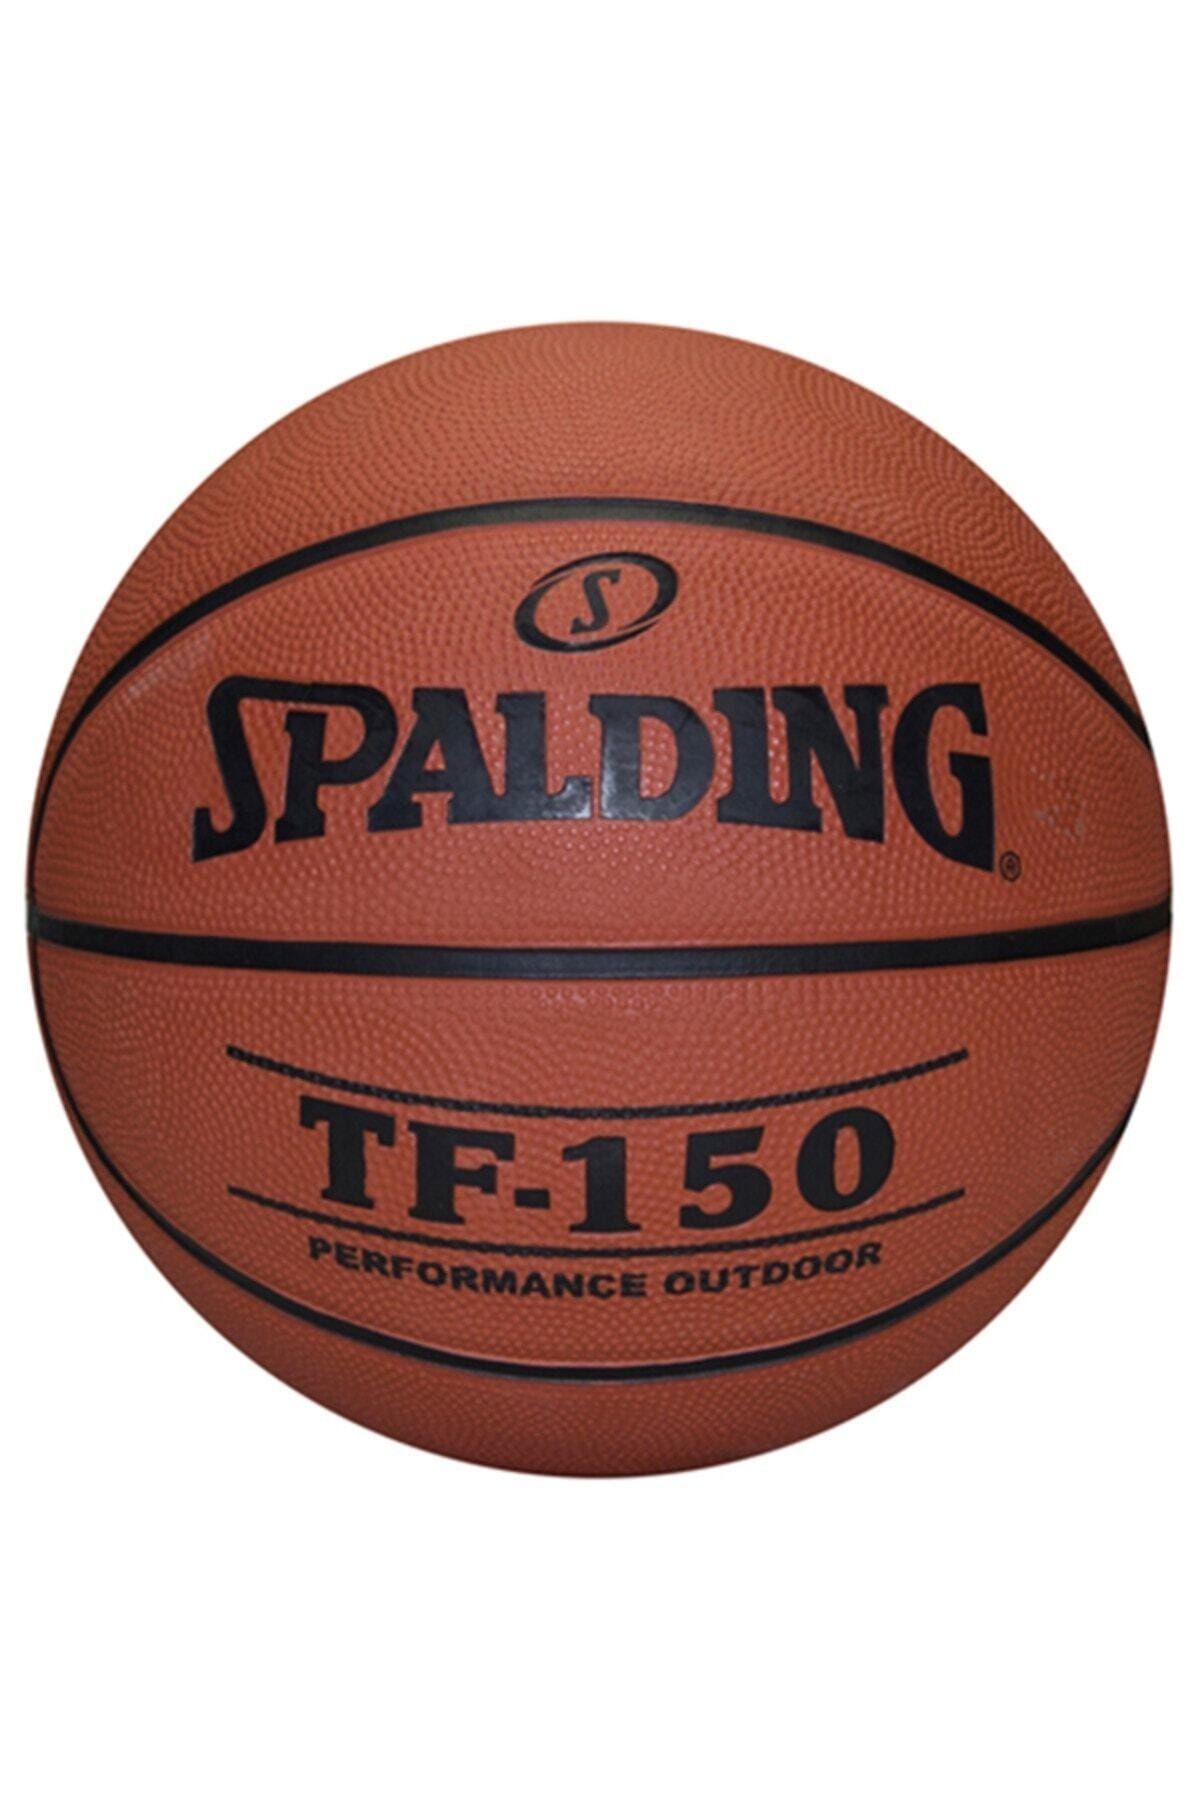 Spalding Tf-150 Basketbol Topu 6 Numara